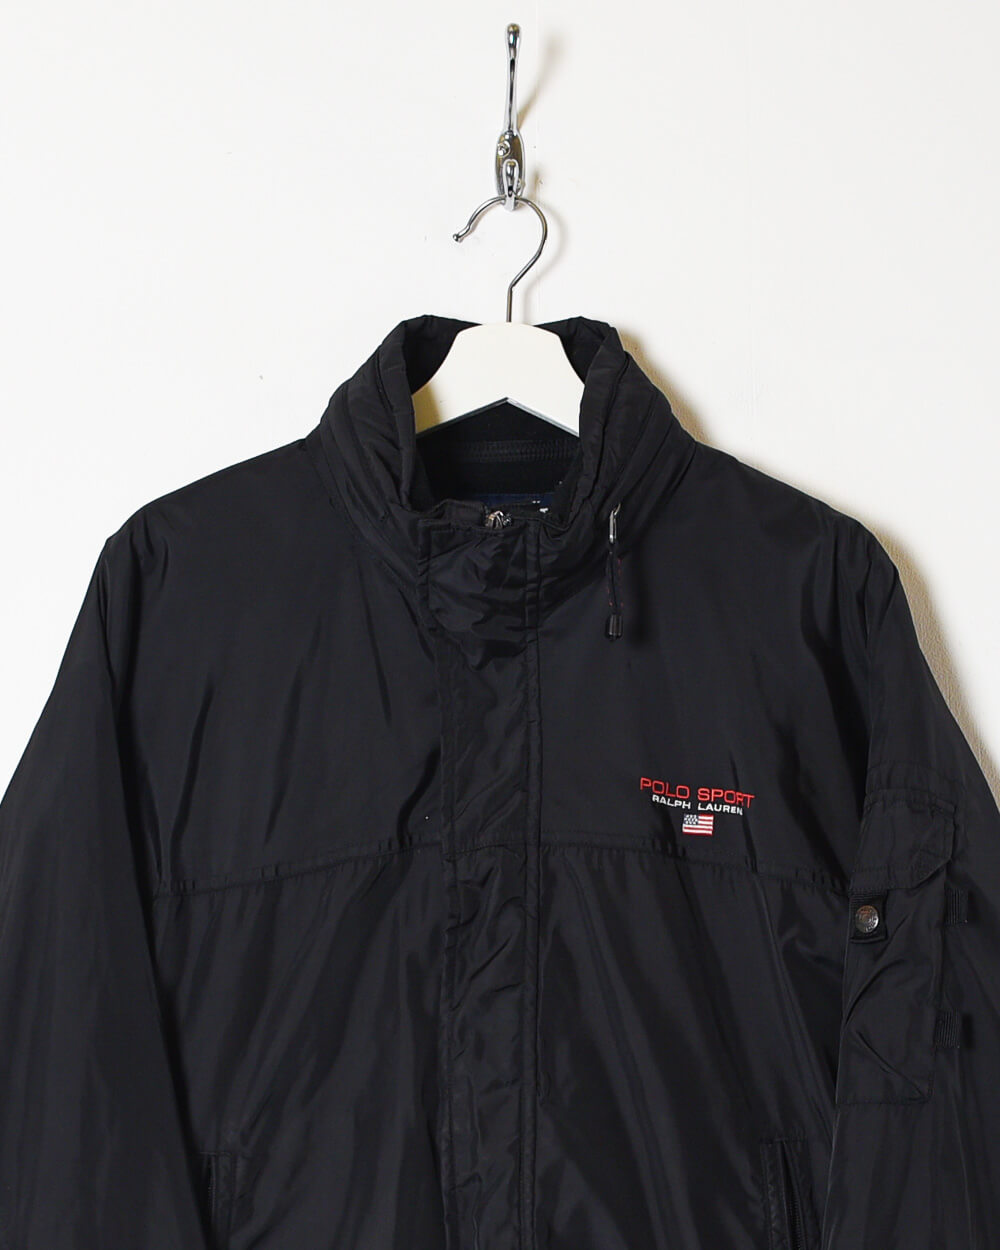 Black Ralph Lauren Polo Sport Fleece Lined Jacket - Medium